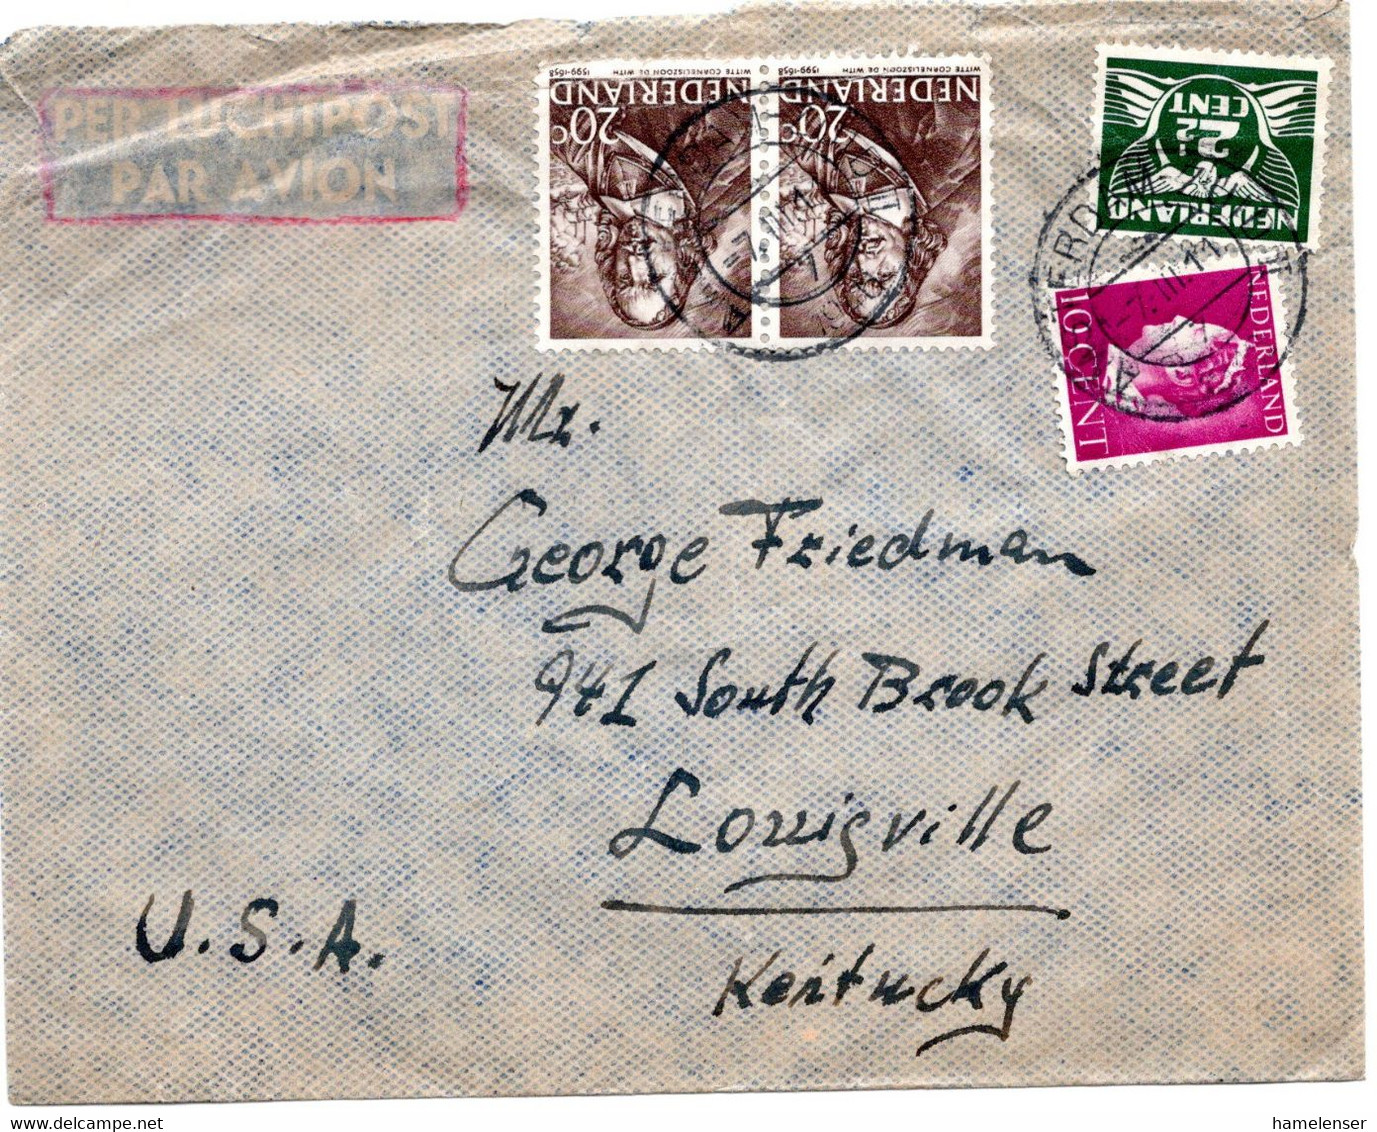 61062 - Niederlande - 1946 - 2@20c Seefahrer MiF A LpBf AMSTERDAM -> Louisville, KY (USA) - Covers & Documents